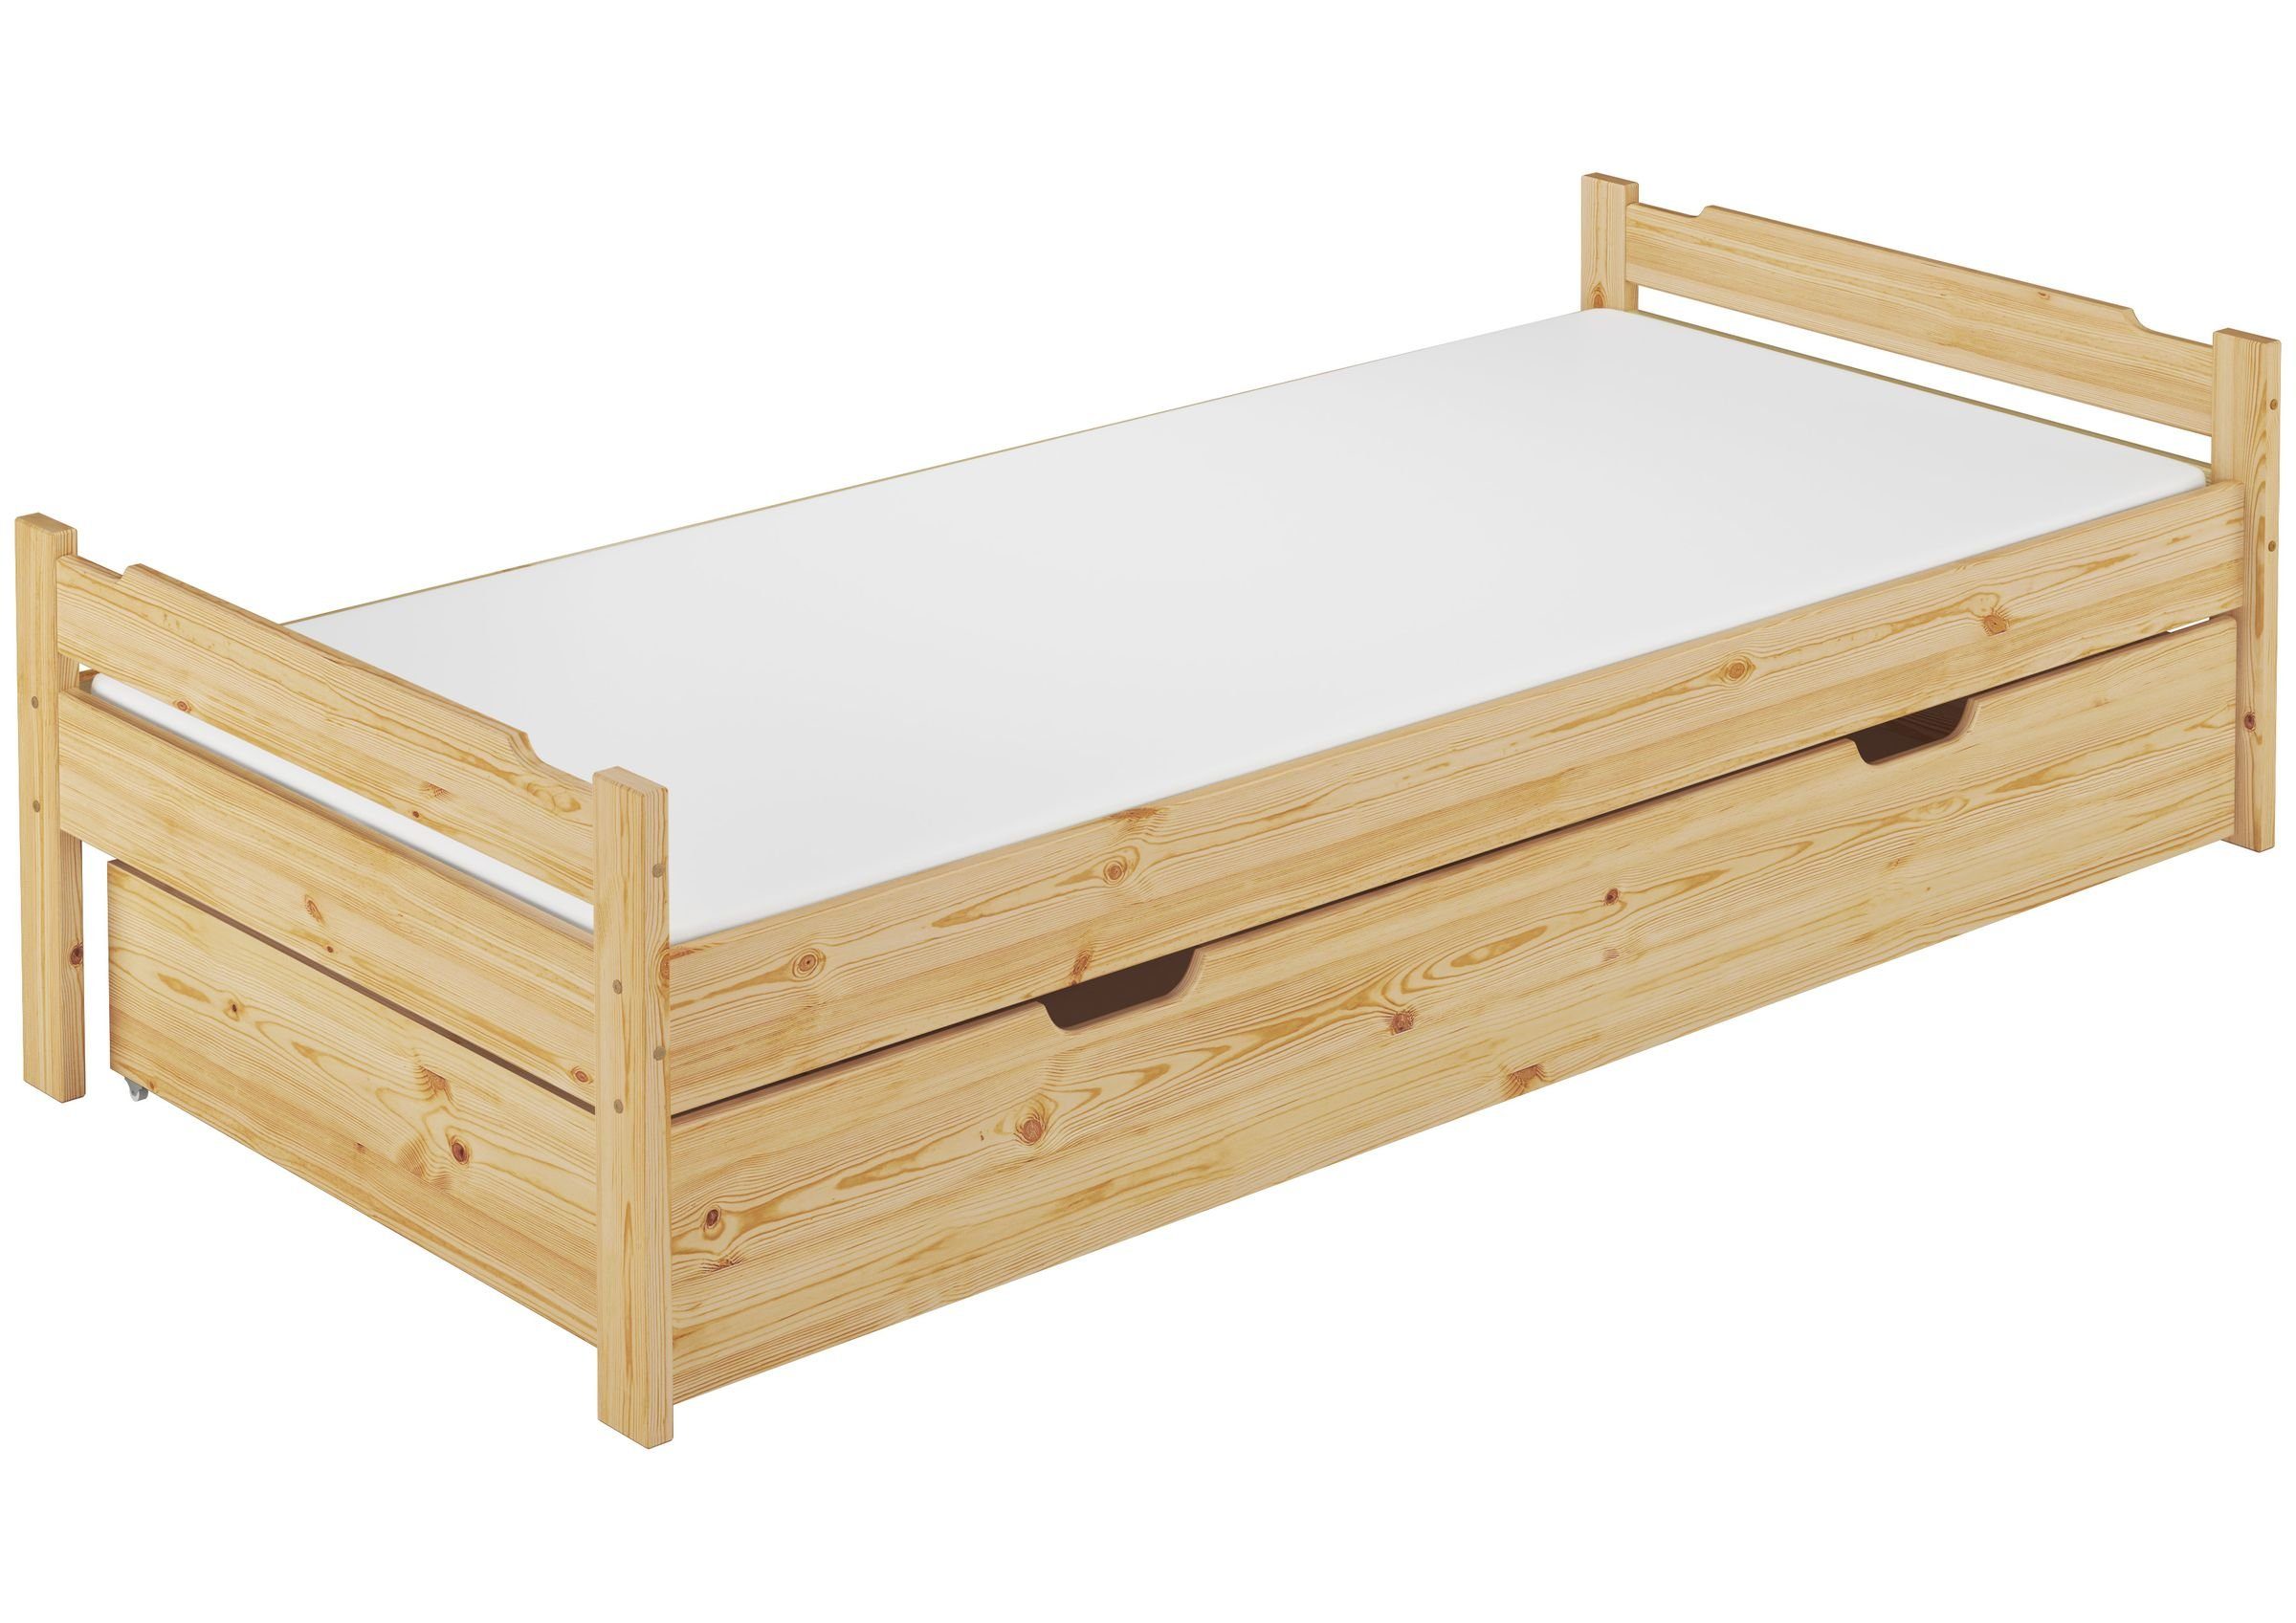 ERST-HOLZ Bett Kinderbett 80x200 Kiefer massiv mit Rost, Matratze und  Bettkasten, Kieferfarblos lackiert